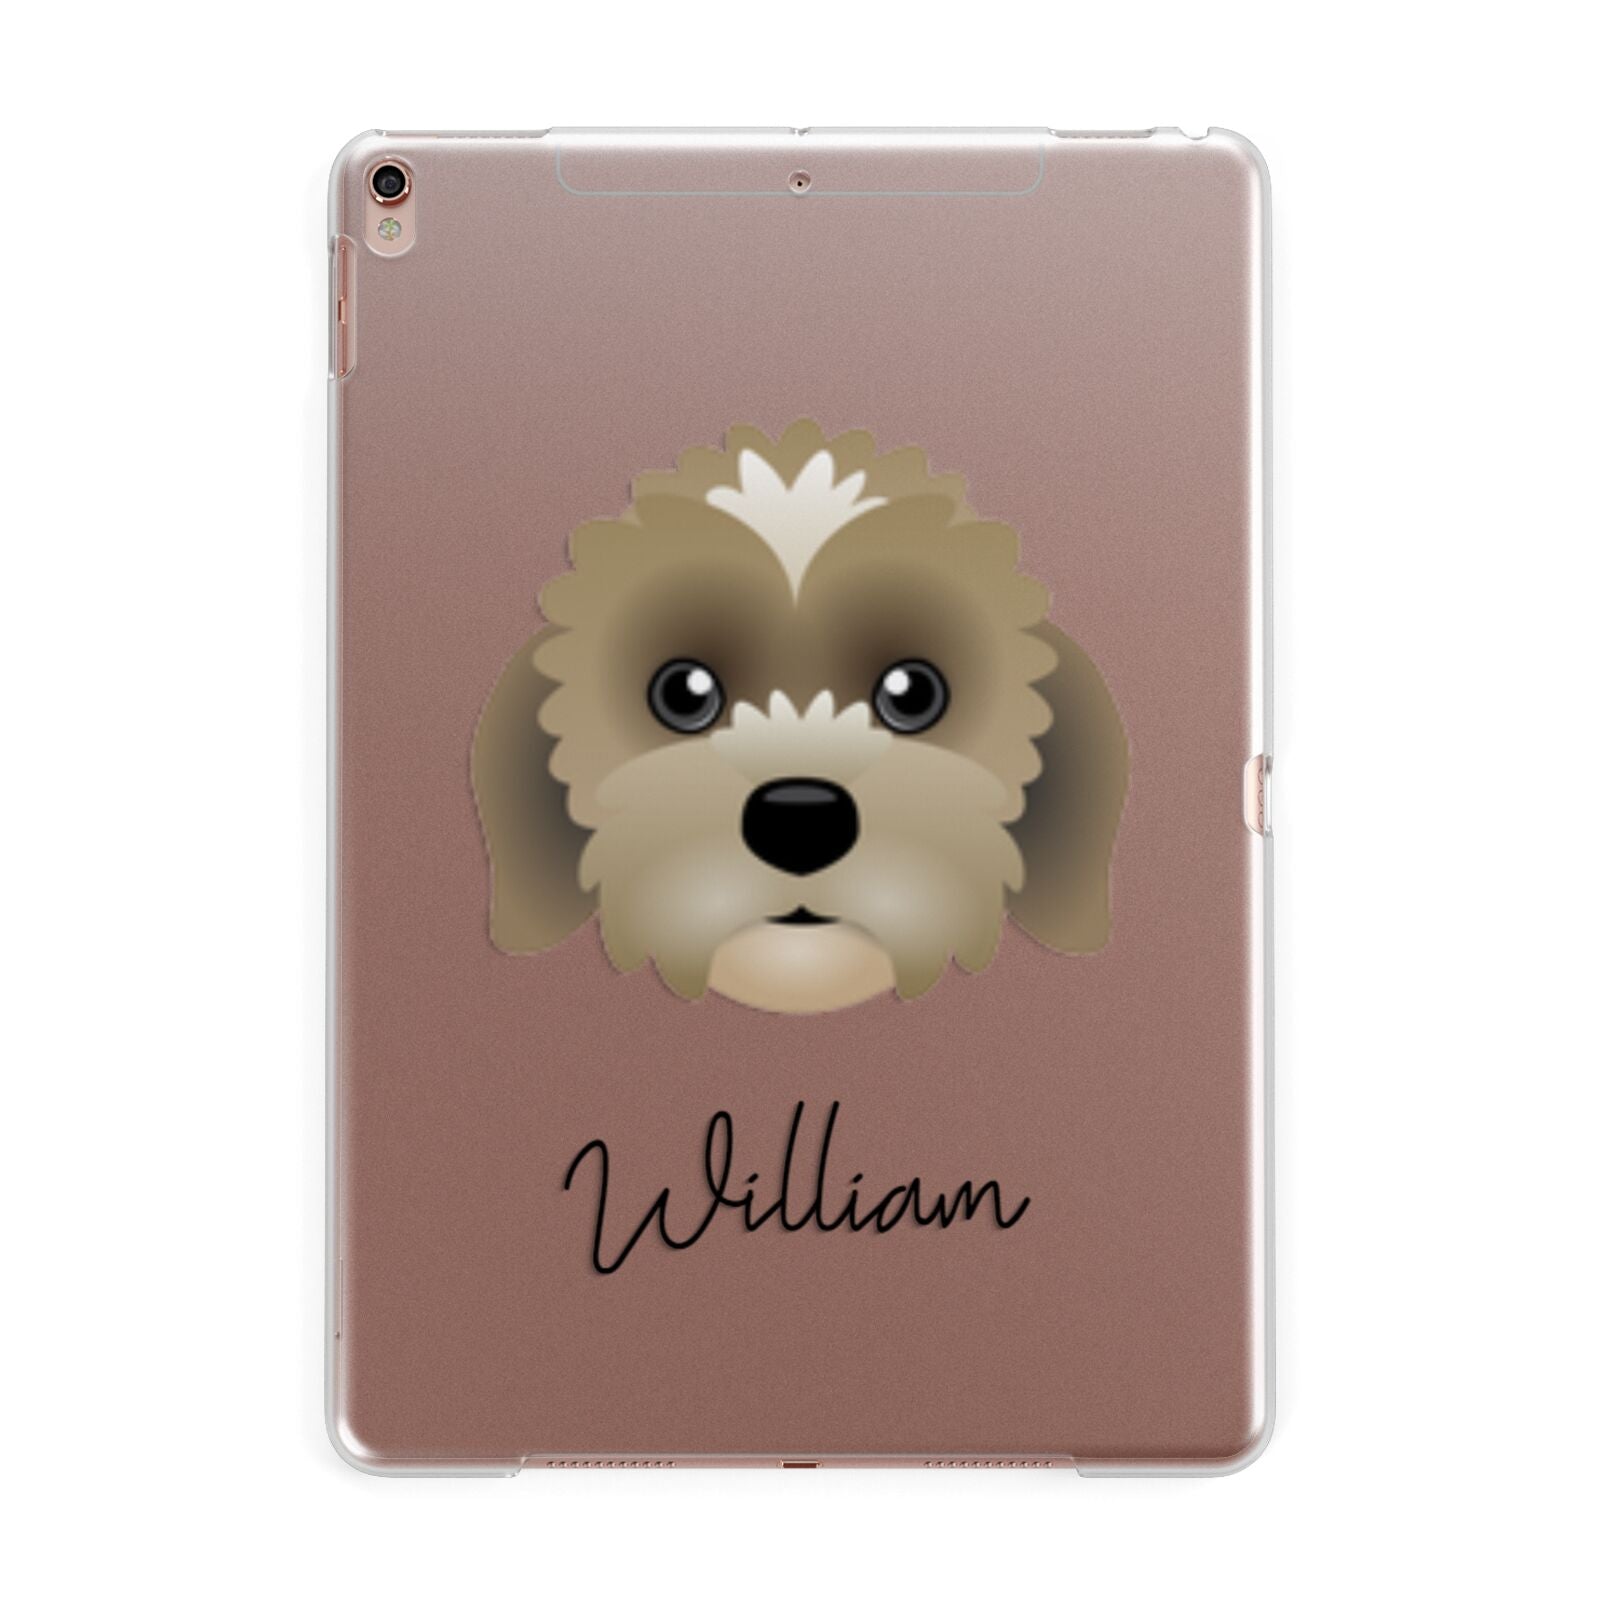 Lachon Personalised Apple iPad Rose Gold Case